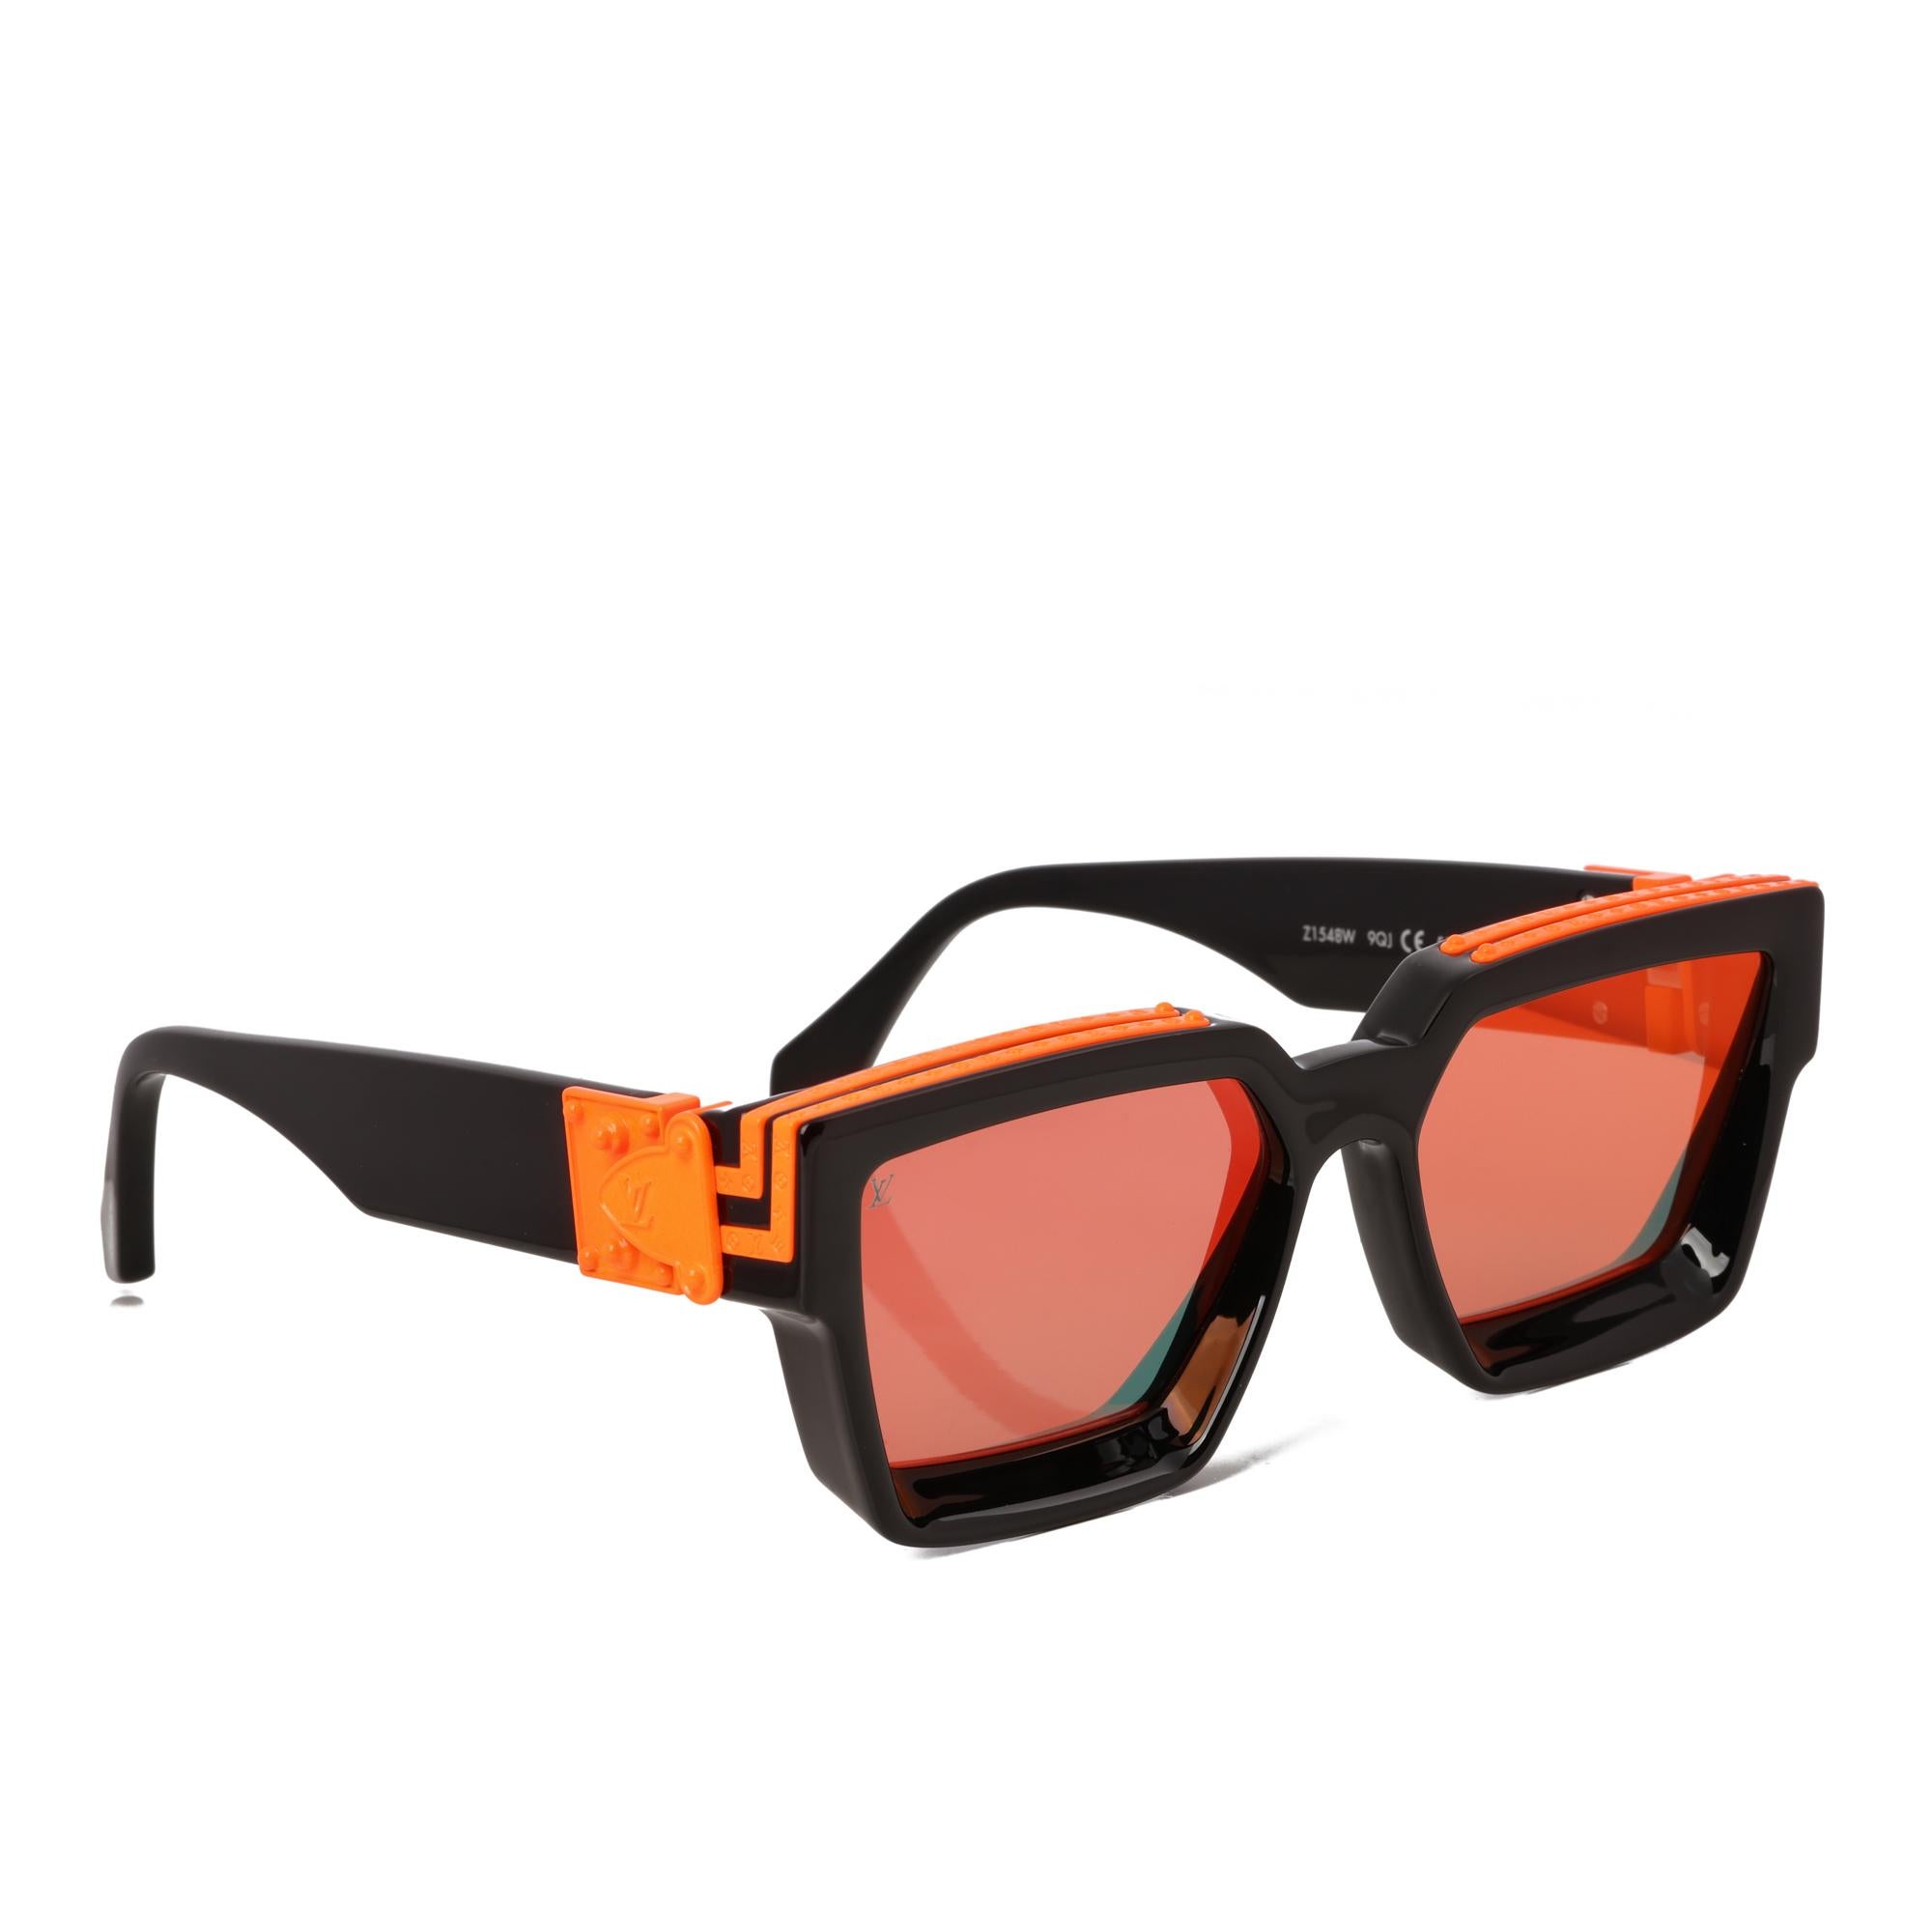 Louis Vuitton - Authenticated Millionaire Sunglasses - Plastic Black For Man, Very Good condition